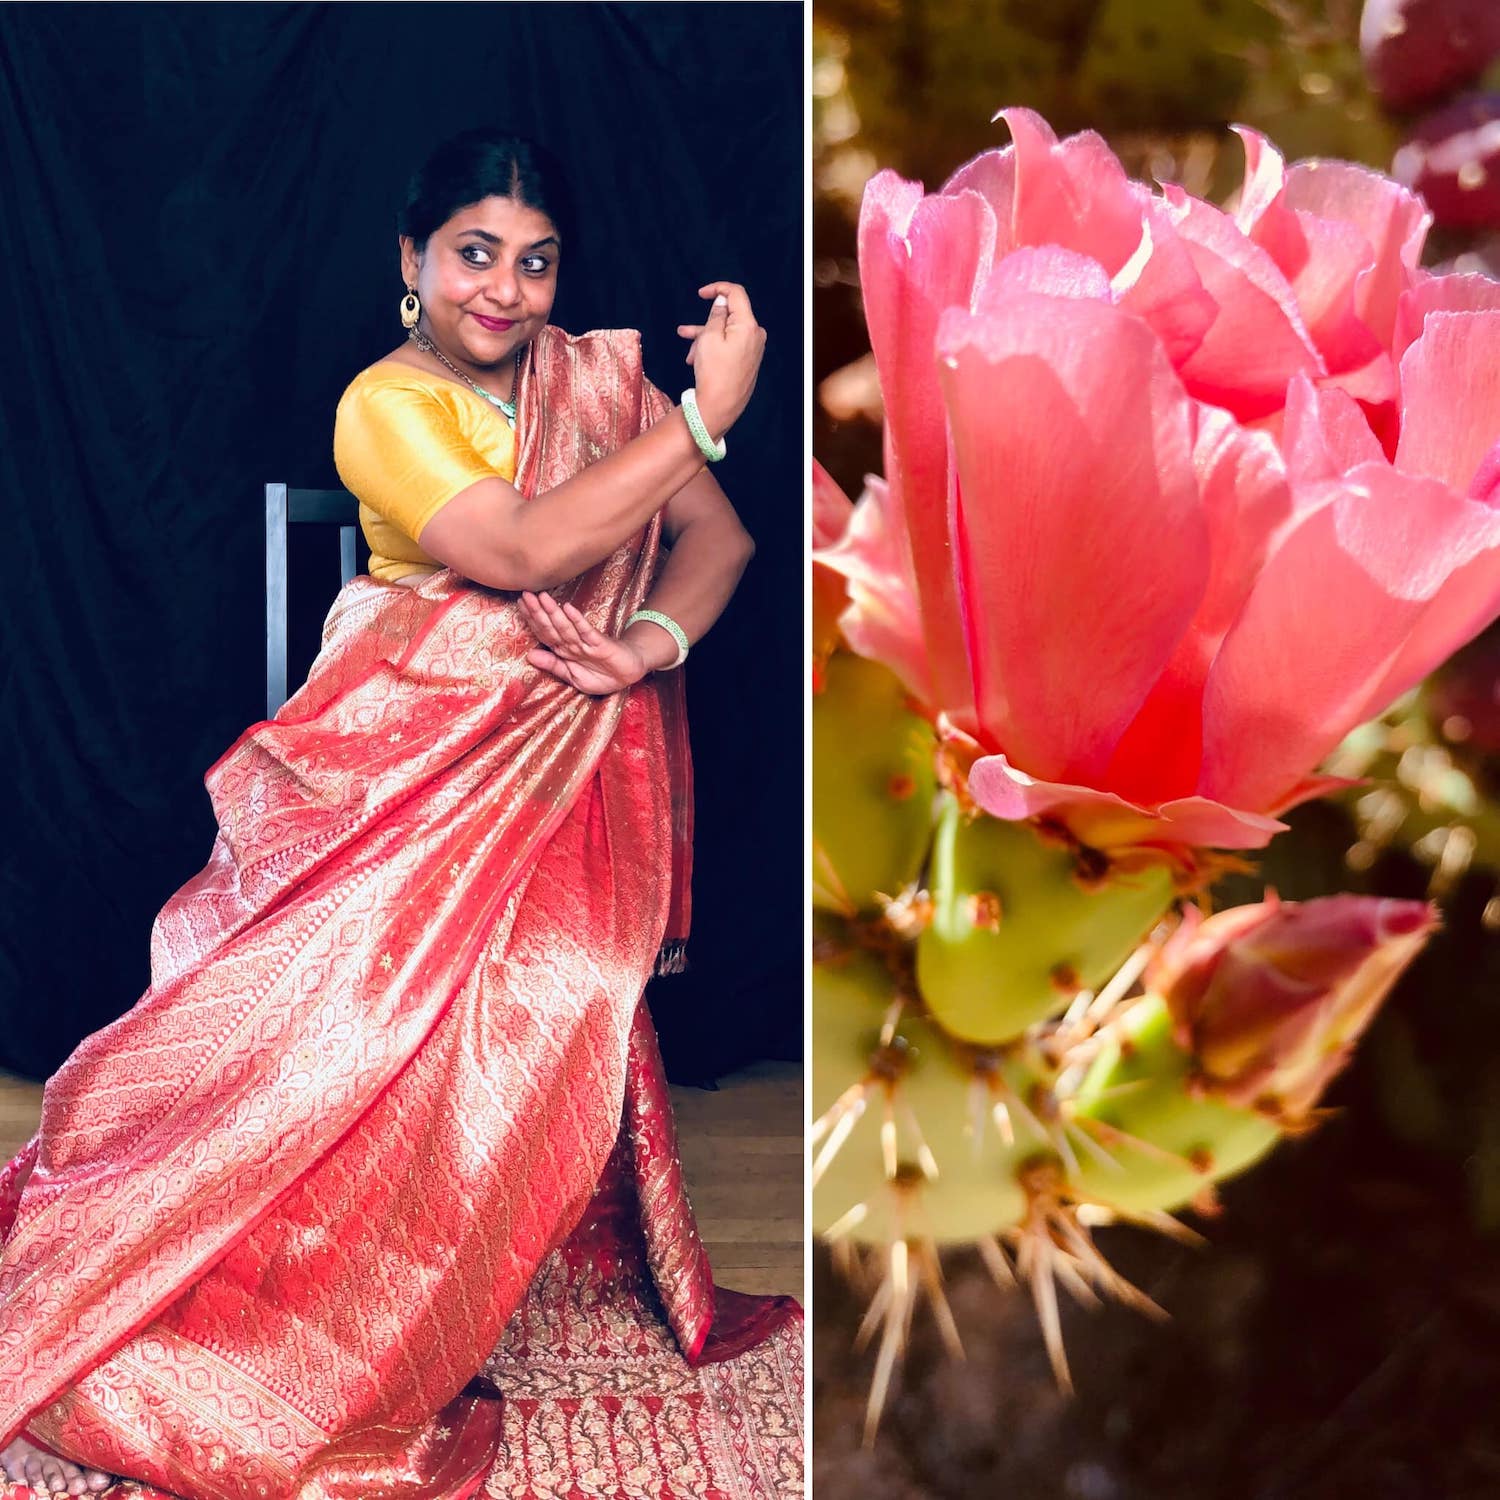 woman dancing in pink sari, next to bright pink flower